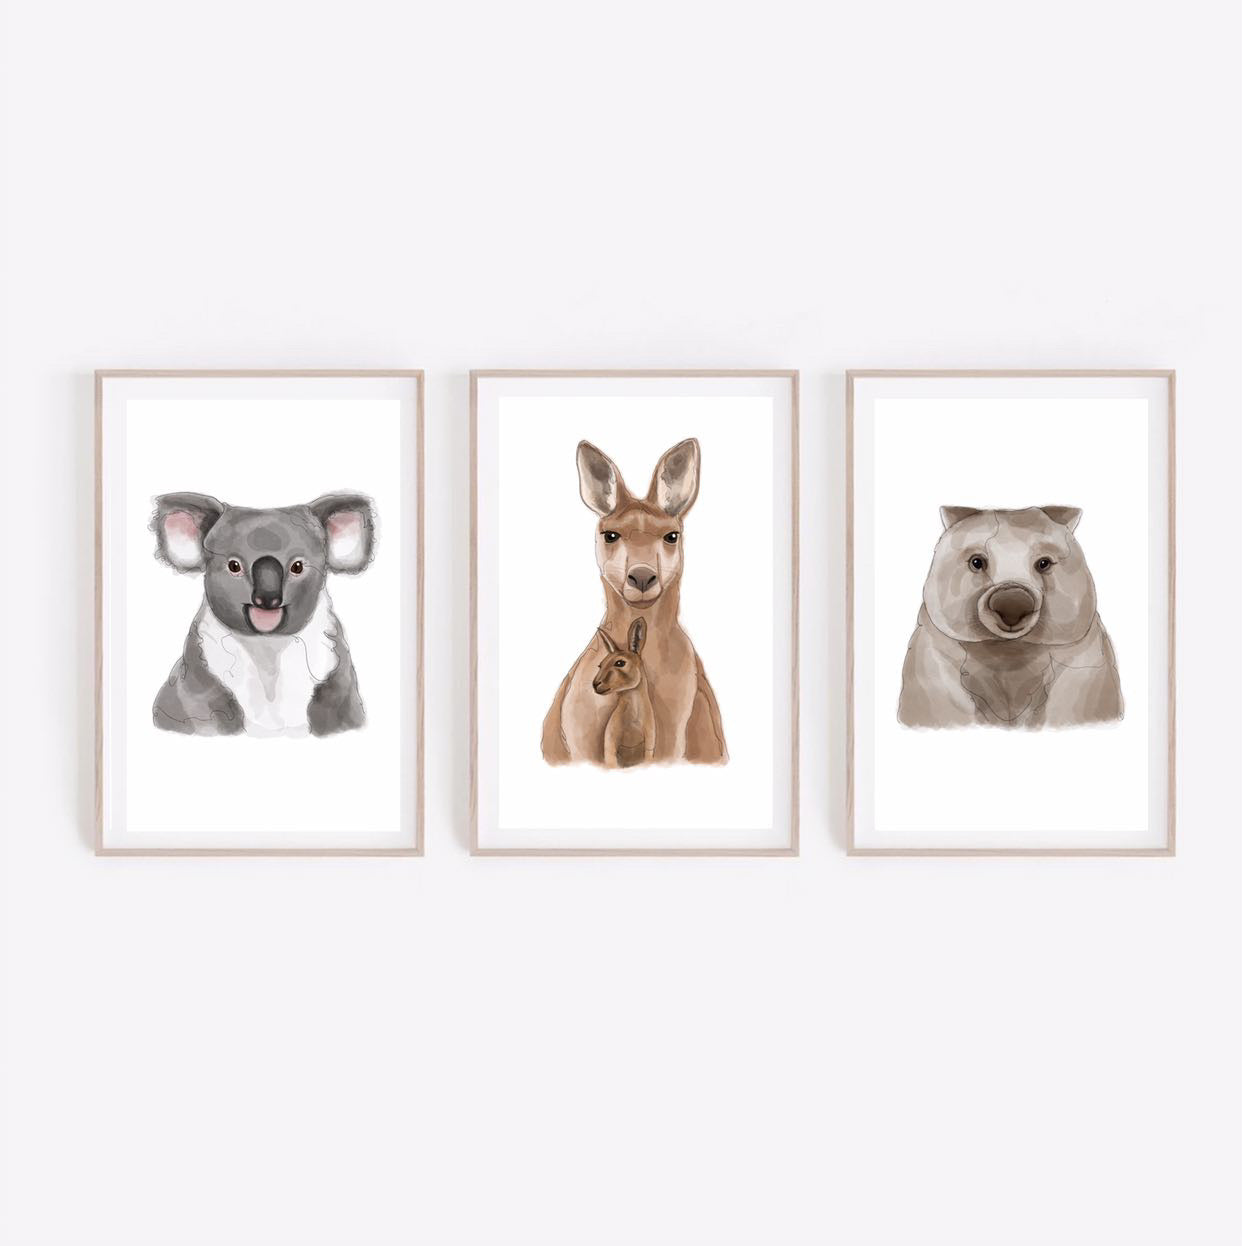 Australian Animals Nursery  Collection - Set of 3 prints' art print by Cassie Zaccardo Art. Australian Art Prints and Homewares. Green Door Decor. www.greendoordecor.com.au